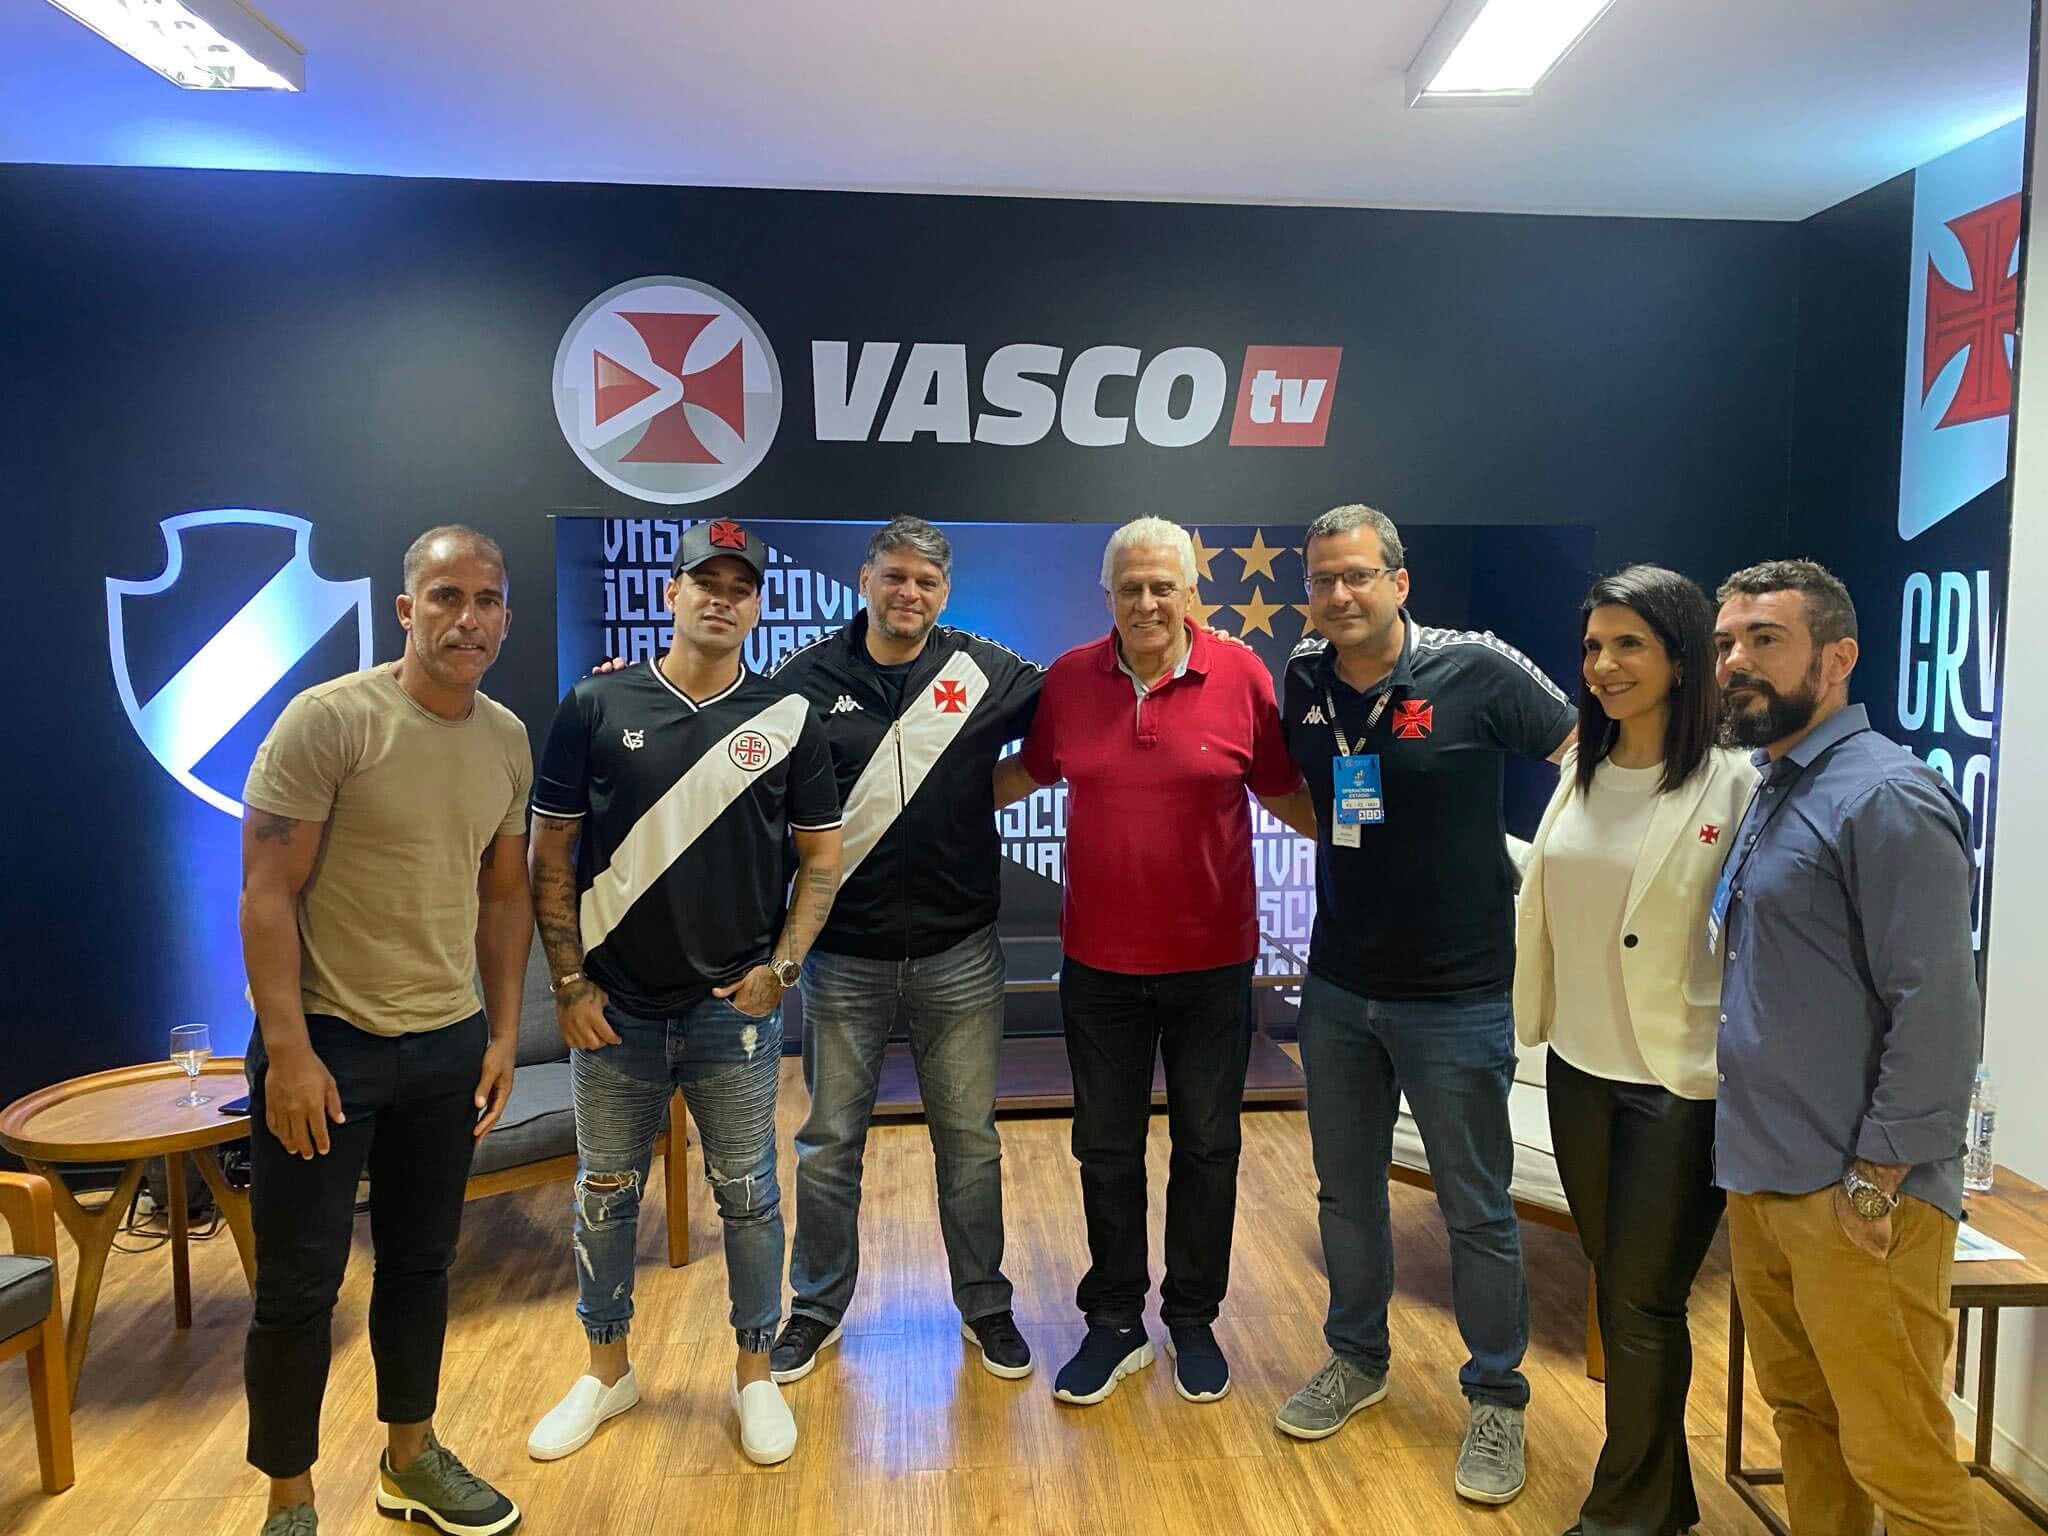 Campeonato Carioca 2021 - Vasco TV - Pay-Per-View